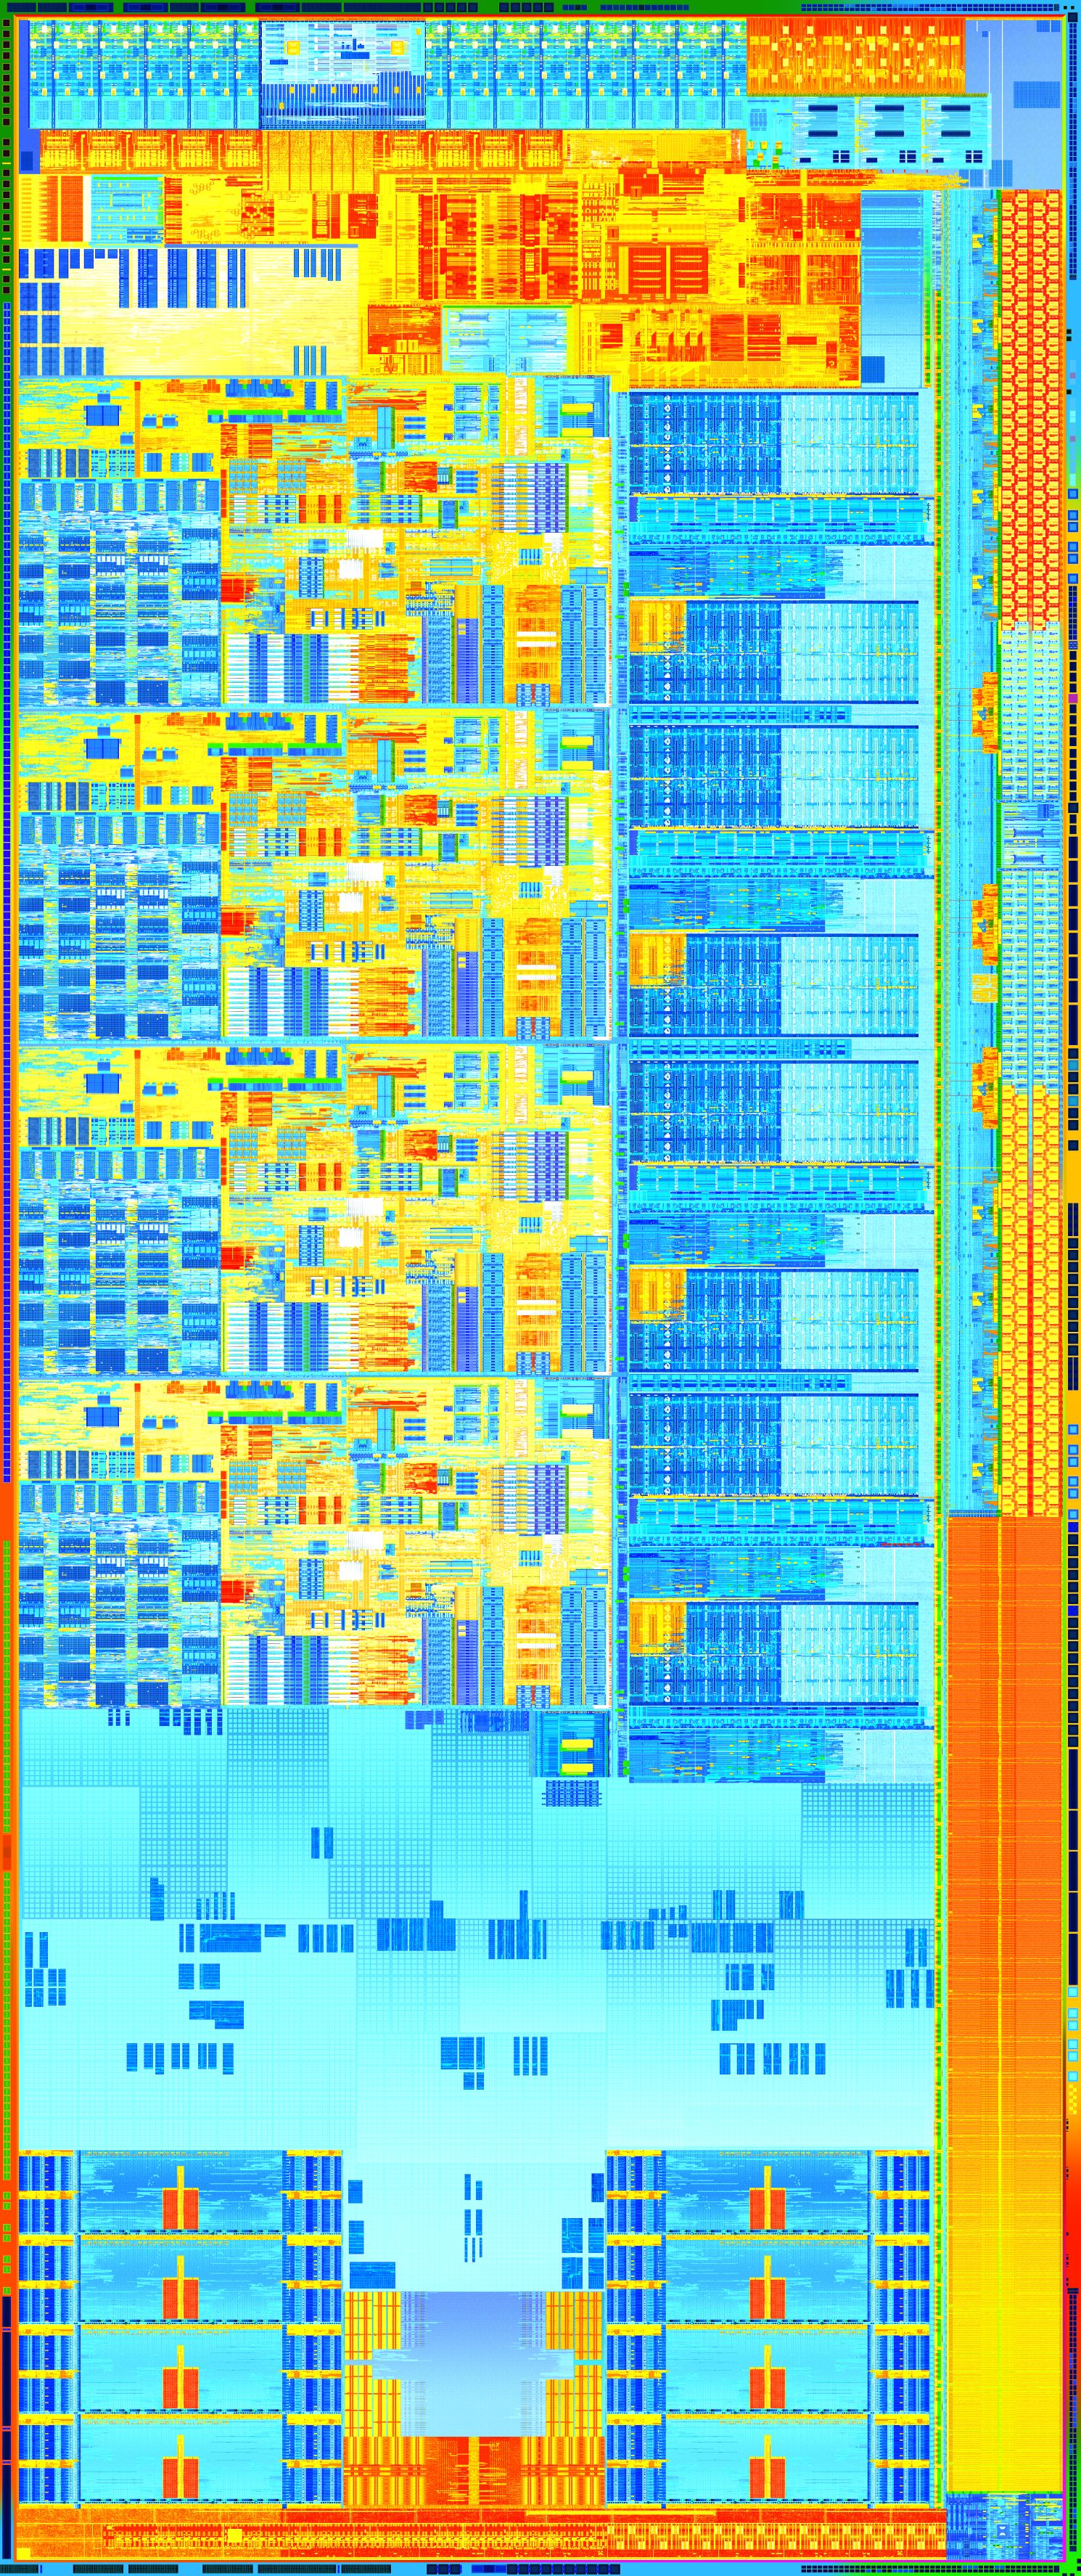 Media asset in full size related to 3dfxzone.it news item entitled as follows: Intel annuncia i processori Core di terza generazione Ivy Bridge | Image Name: news17086_1.jpg